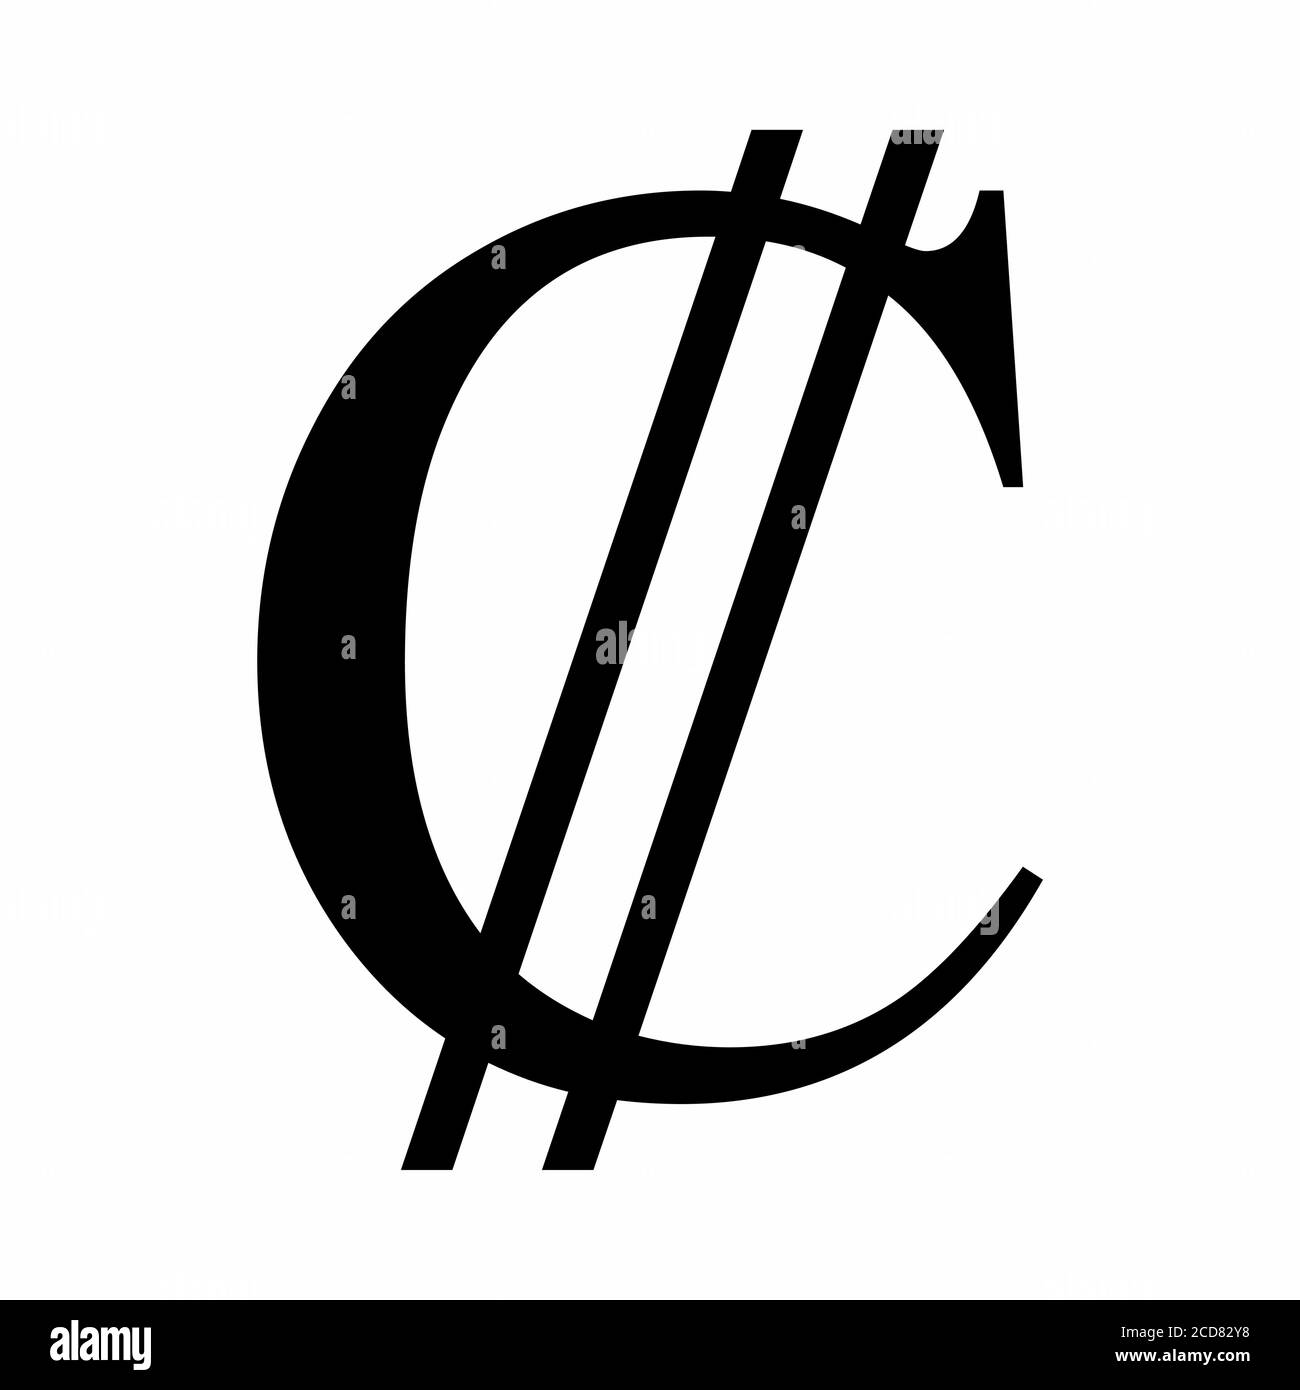 Colon currency symbol Stock Vector